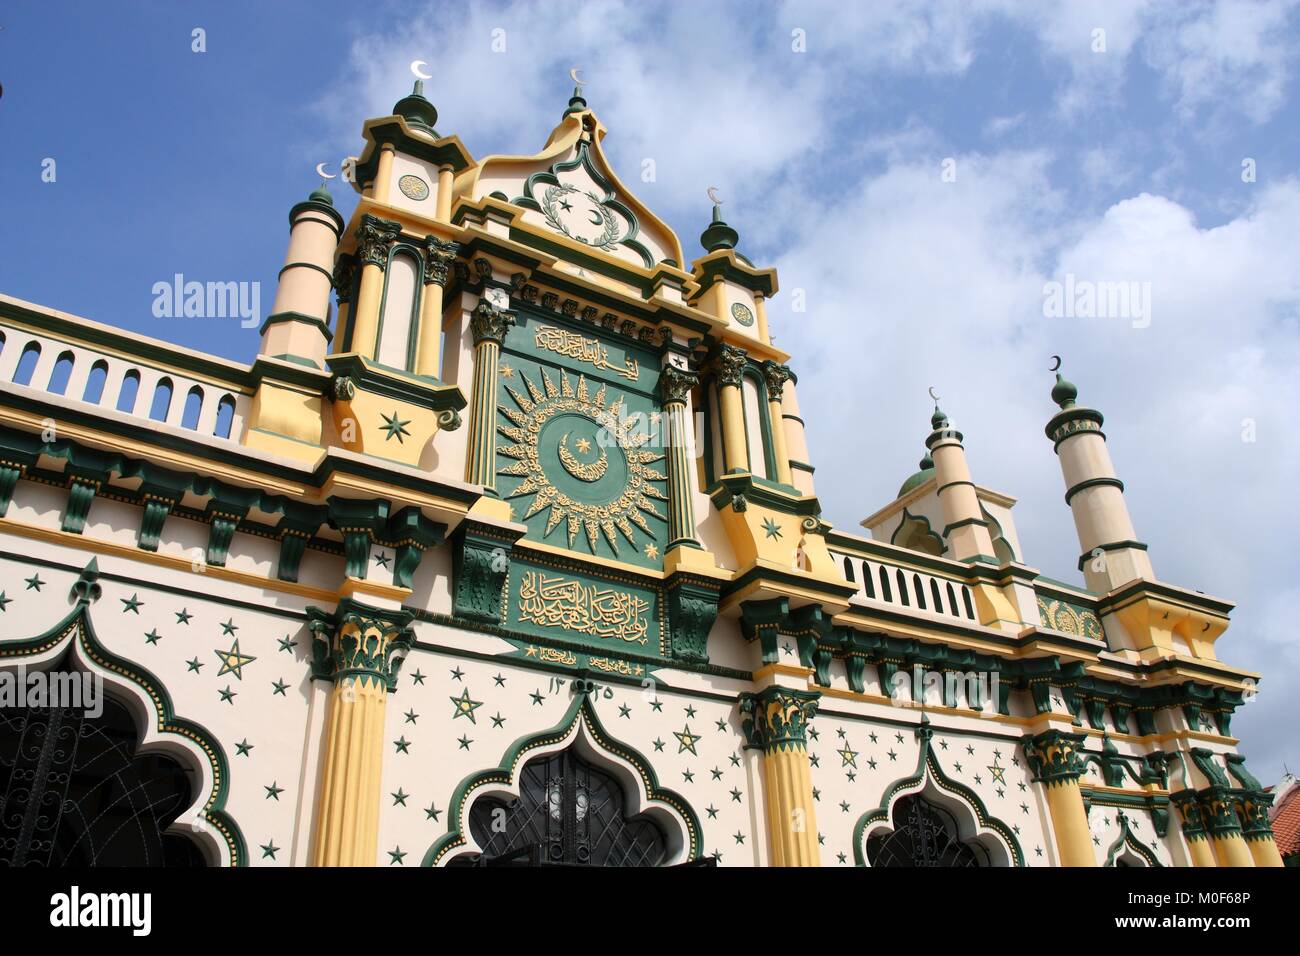 La moschea di Singapore - religione musulmana landmark. Masjid Abdul Gaffoor. Foto Stock